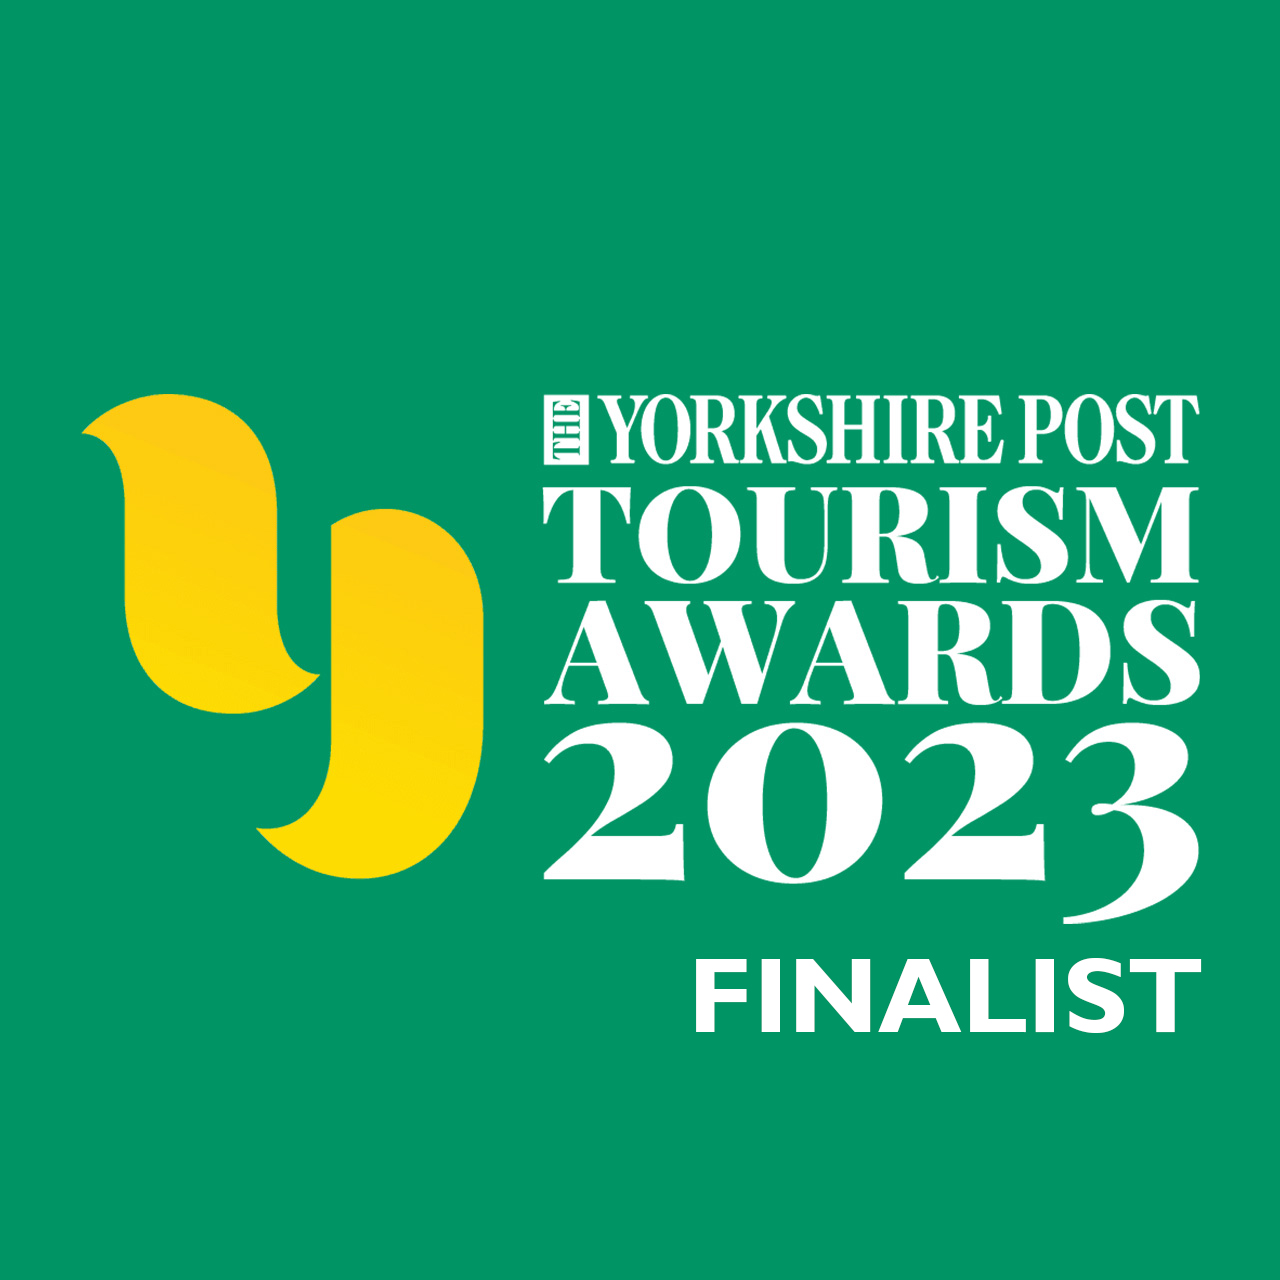 Yorkshire Tourism Awards 2023 Finalist